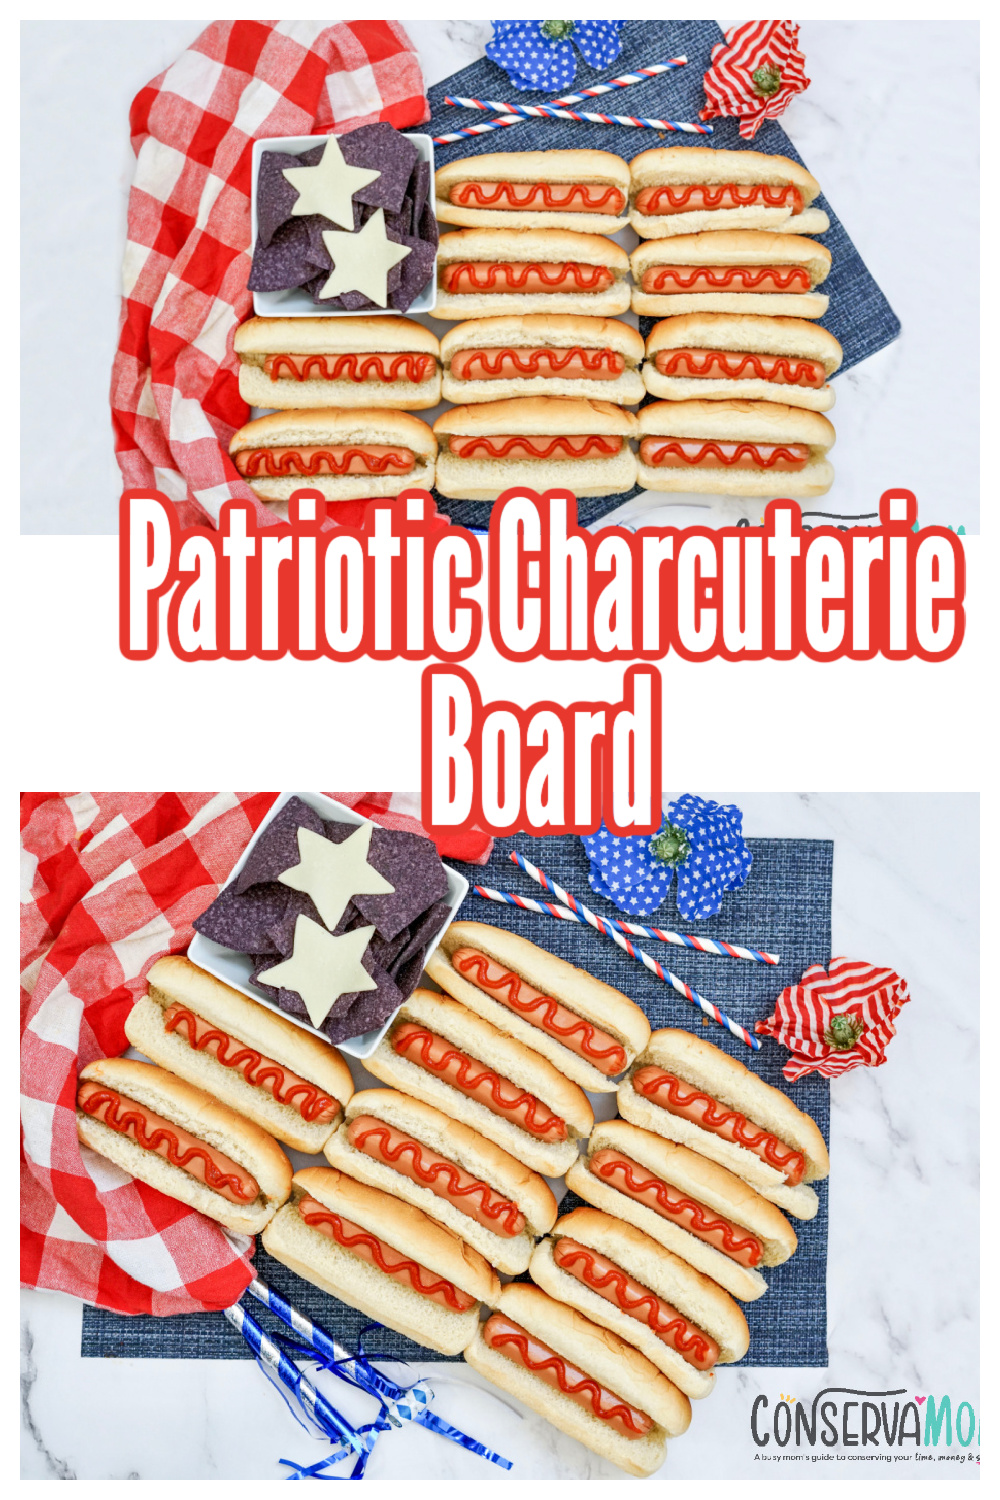 Patriotic Charcuterie Board